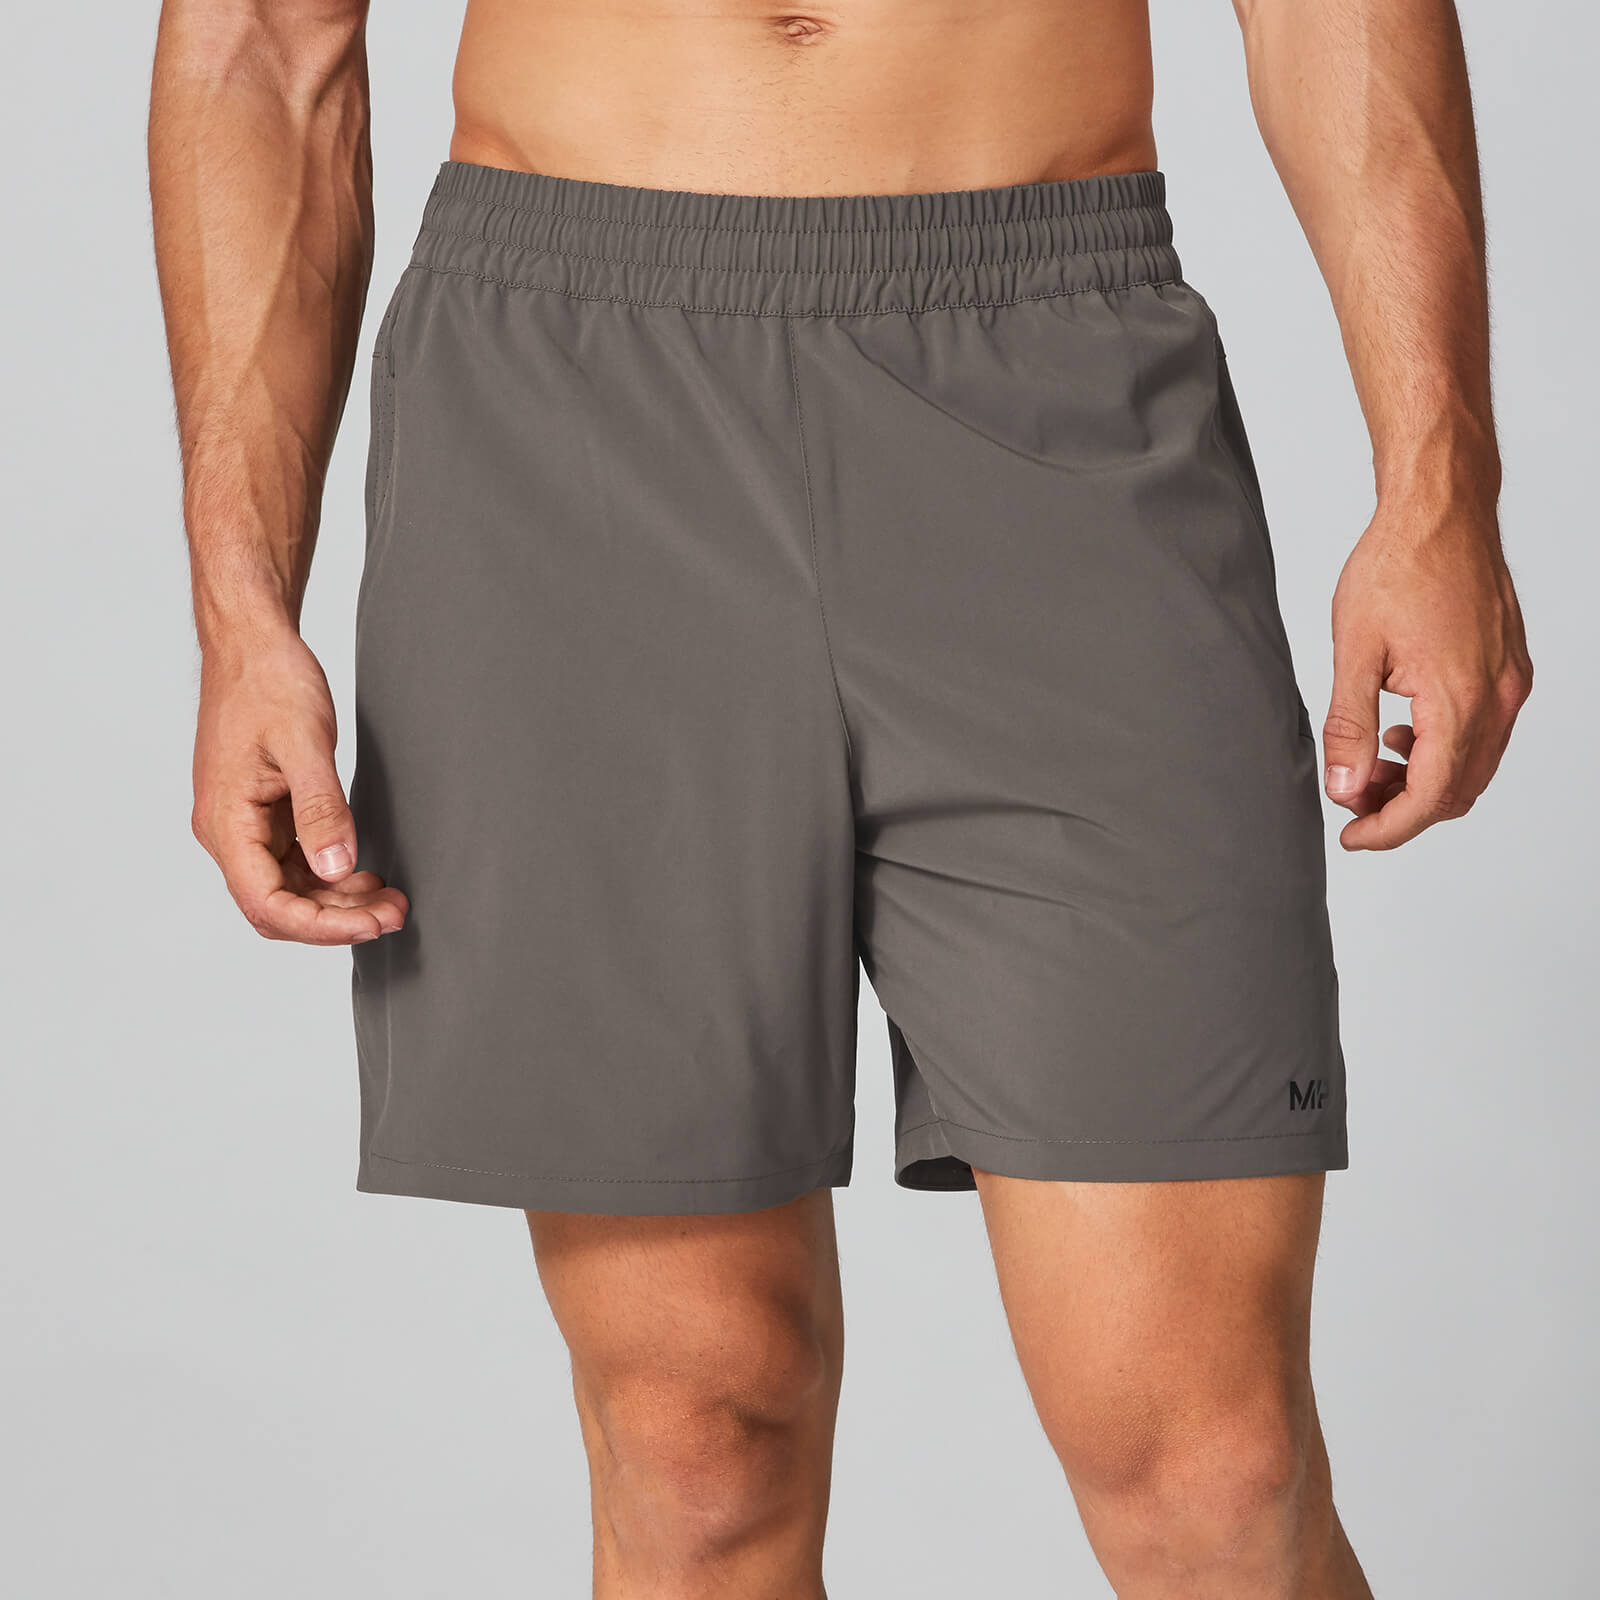 MP Men's Sprint 7 Inch Shorts - Driftwood - S